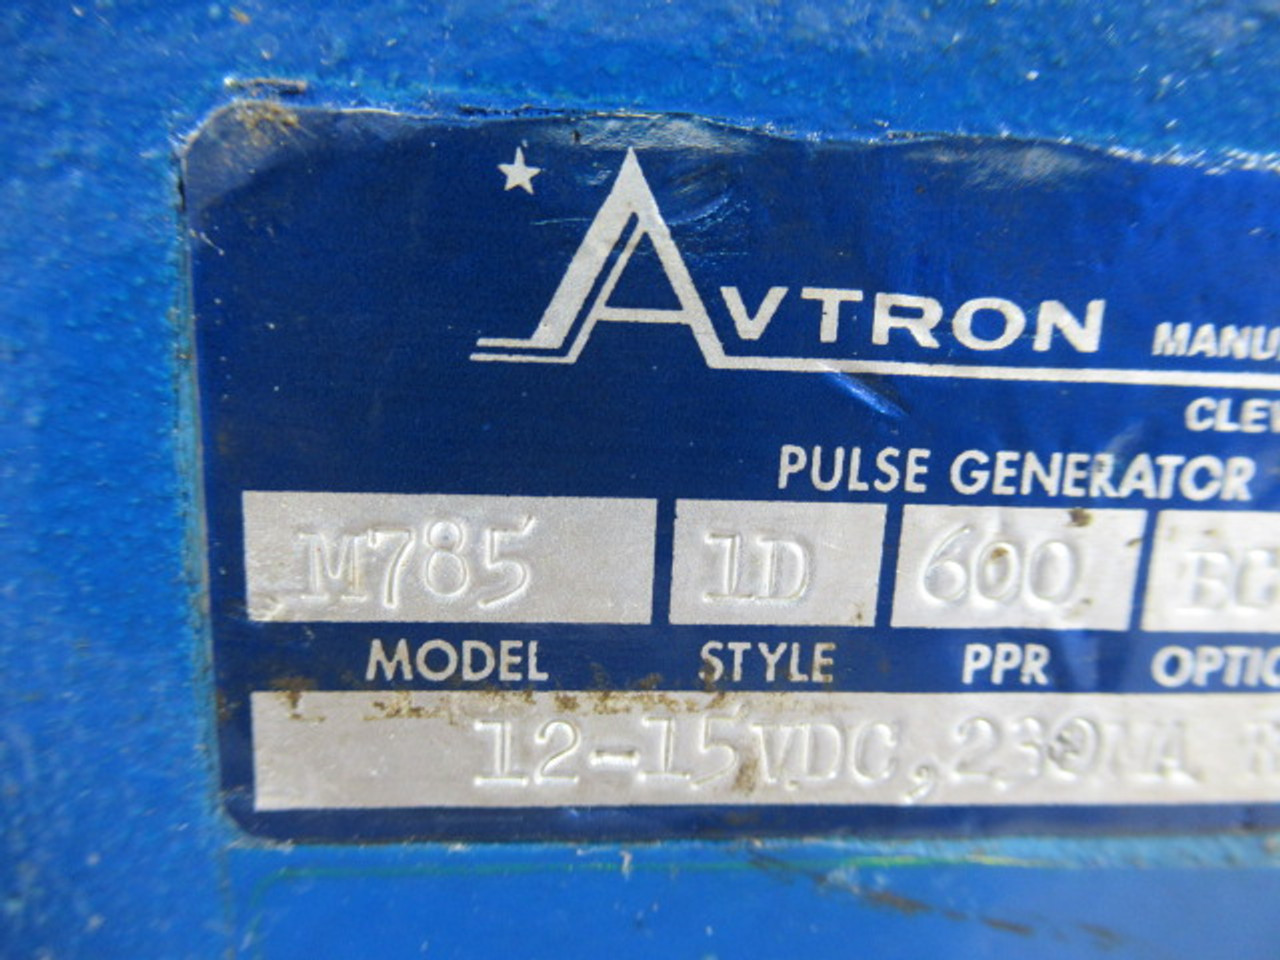 Avtron M785 Blue Pulse Generator Style 1D PPR 600 Rev-Y Option BC USED